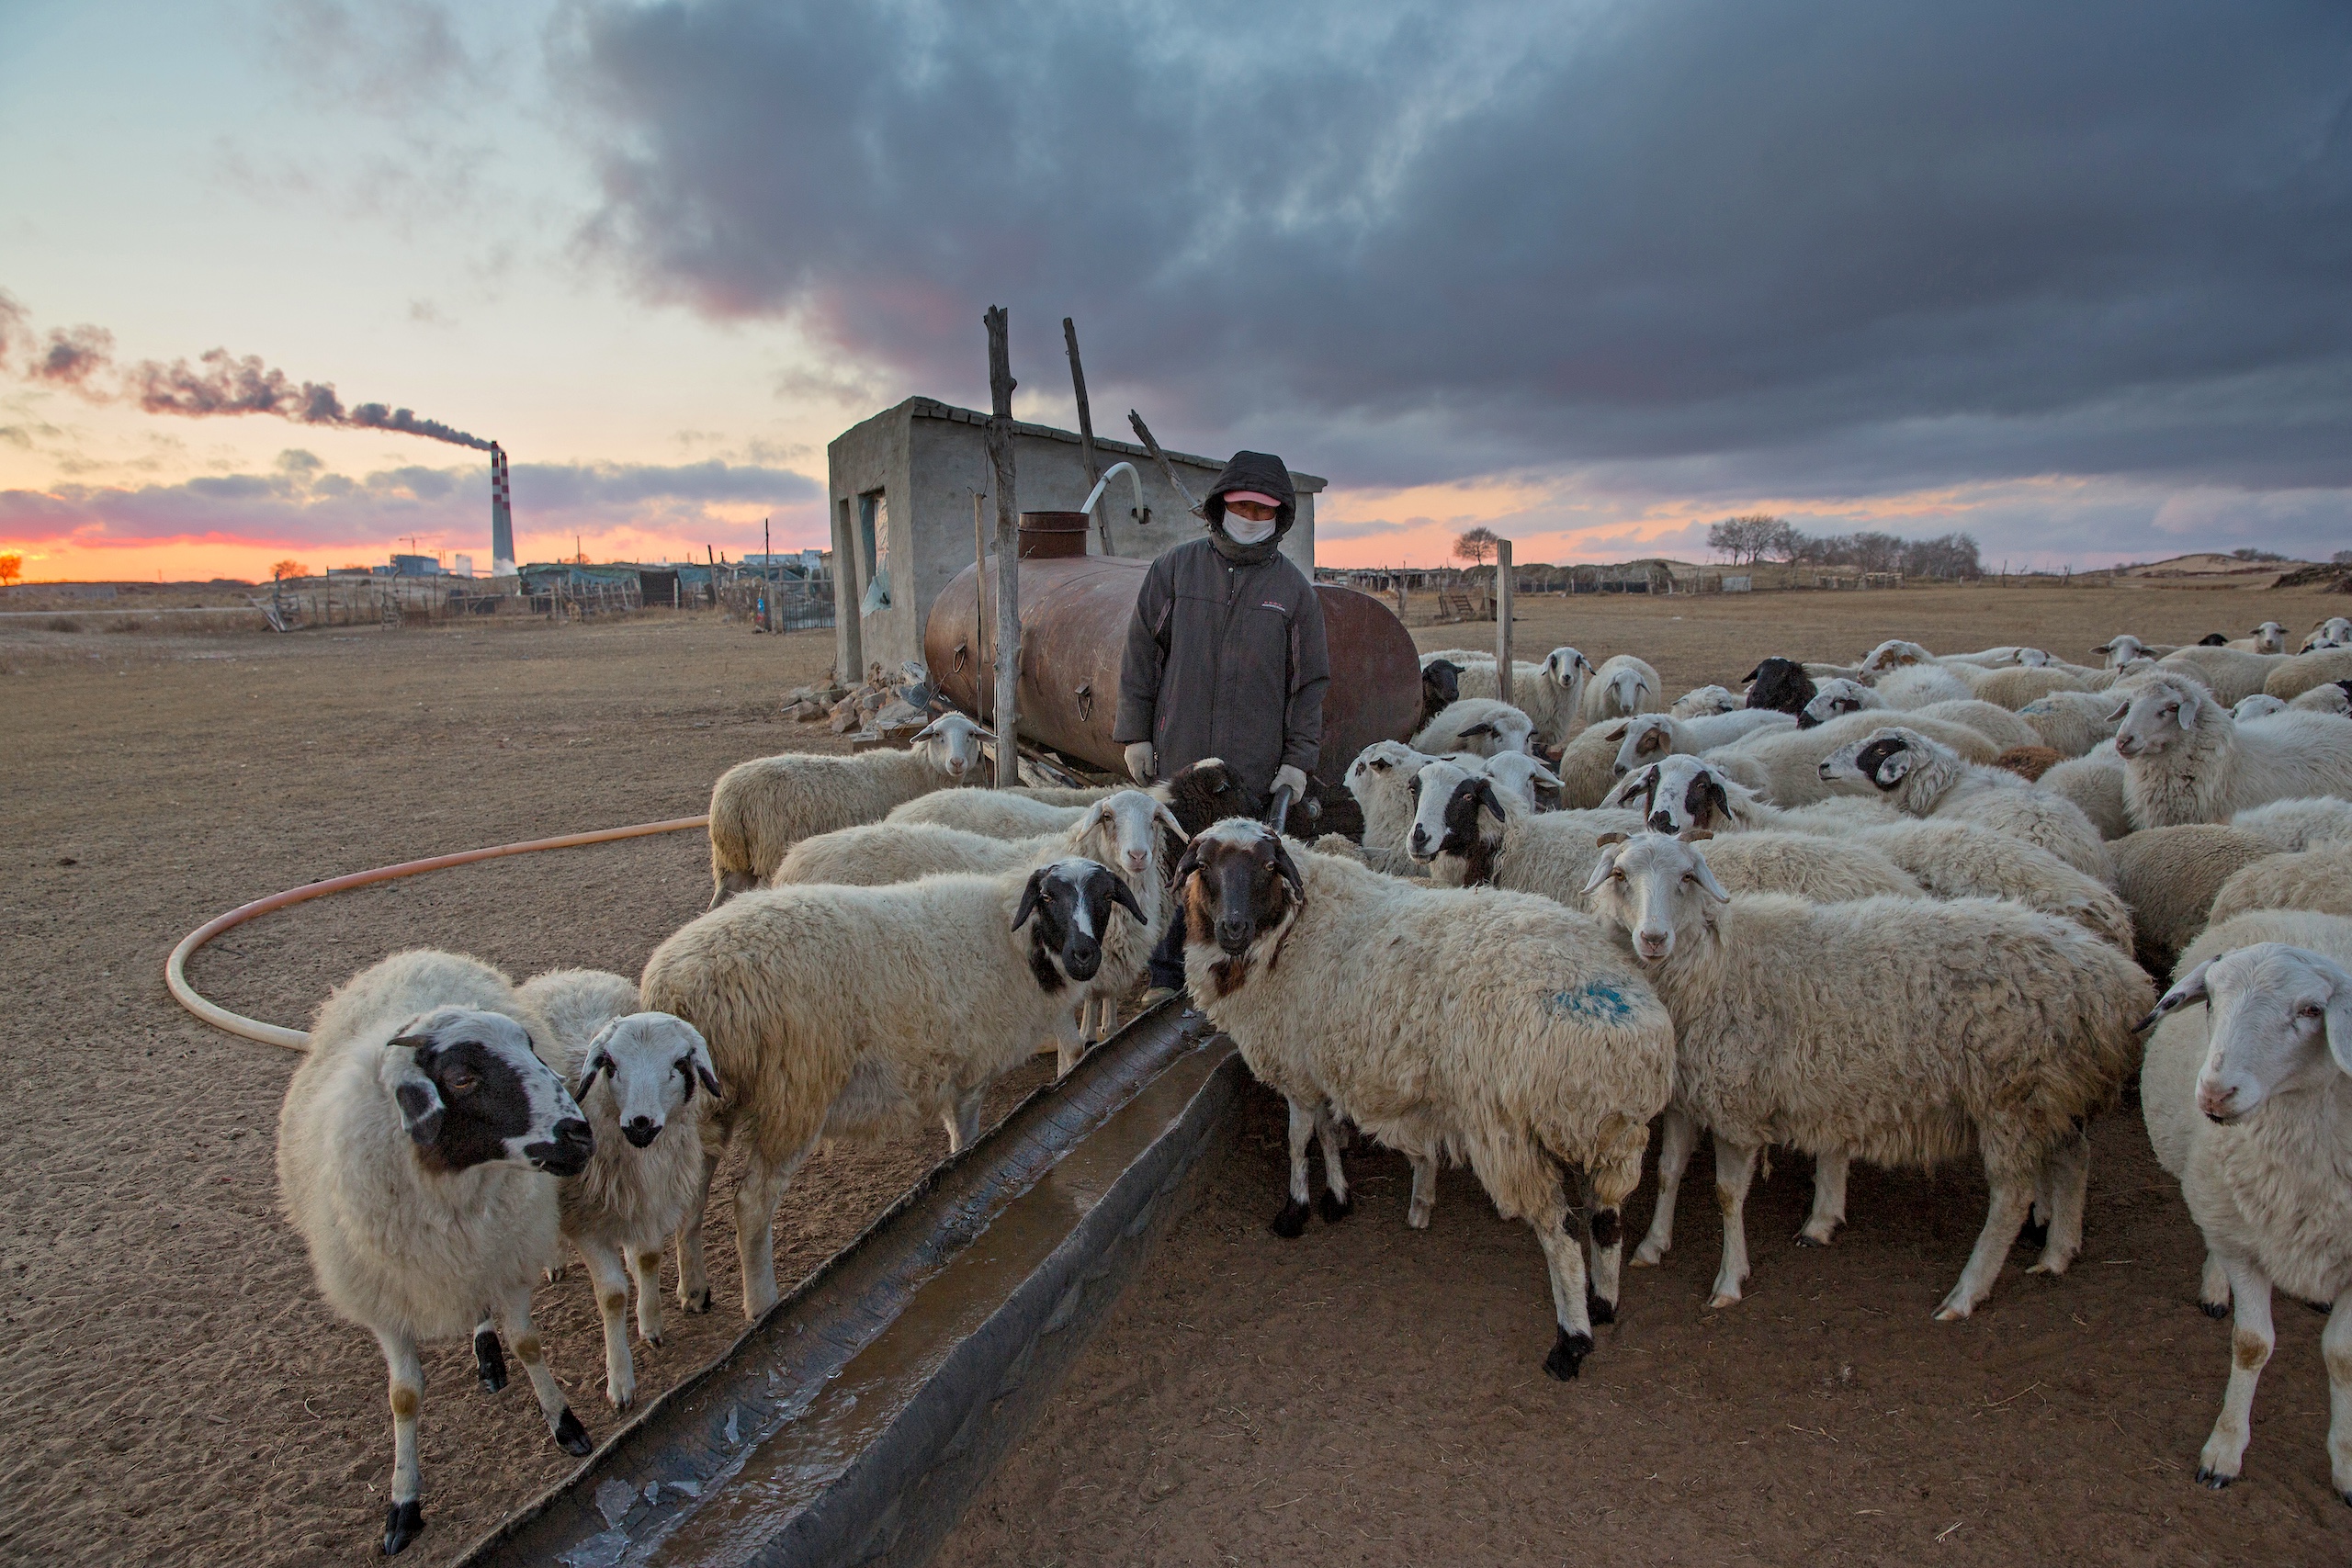 <p>在内蒙古西北部，一位牧民正在家门外照看羊群，而不远处正是煤制气工厂。如果没有专门的计划确保清洁能源政策的公平性，贫困农村地区的人们容易被忽视。图片来源：绿色和平</p>